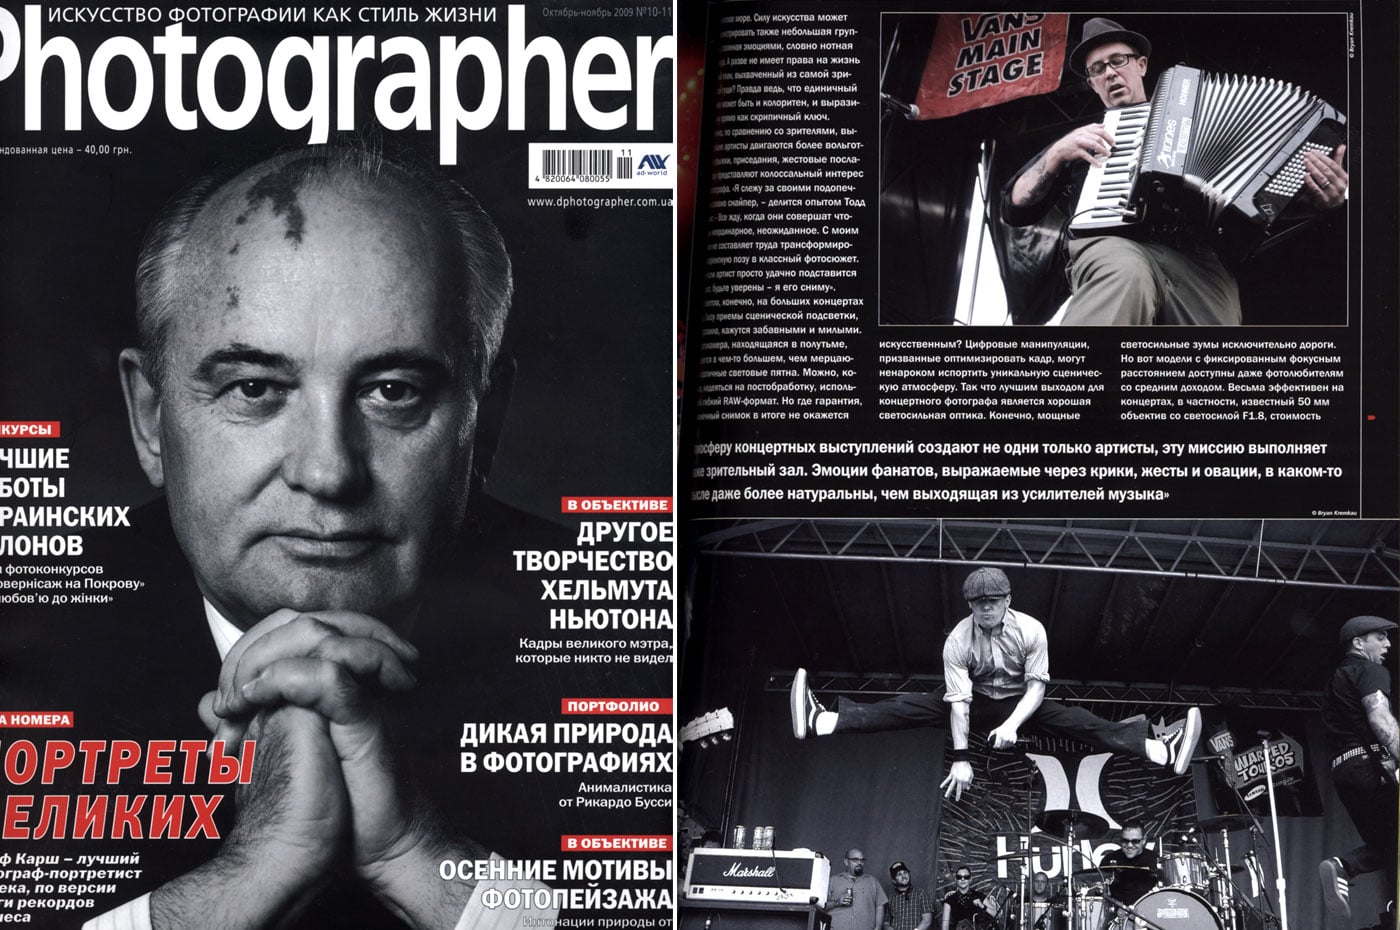 Photographer Magazine: Ukraine